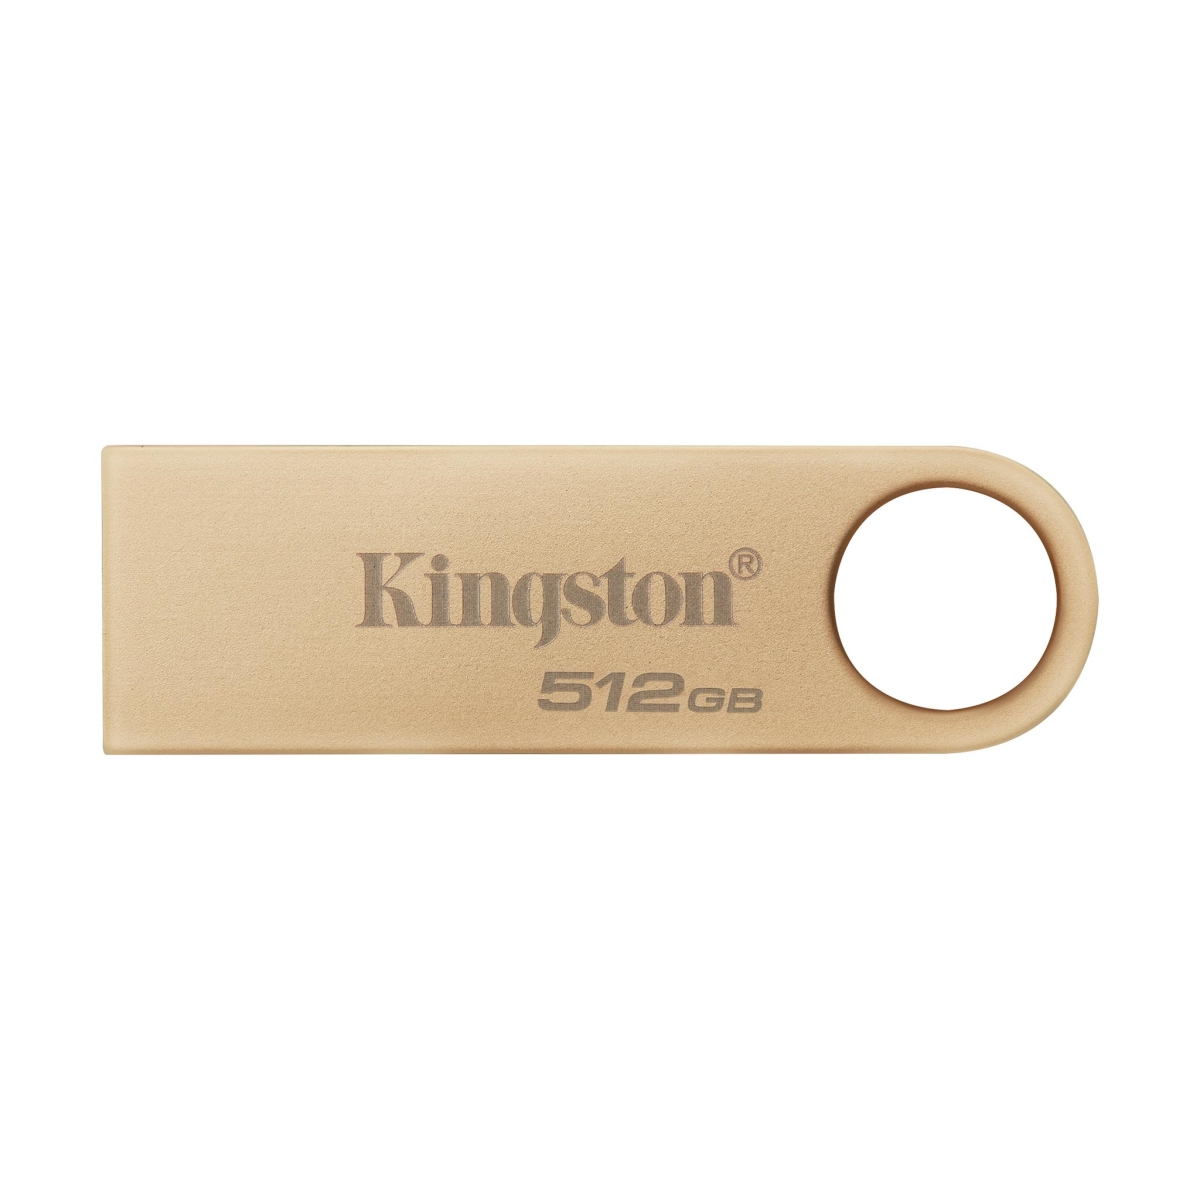 Picture of Kingston DTSE9G3-512GB 512 GB 220 MBs Metal USB 3.2 Gen 1 DataTraveler SE9 G3 Pendrive&#44; Gold